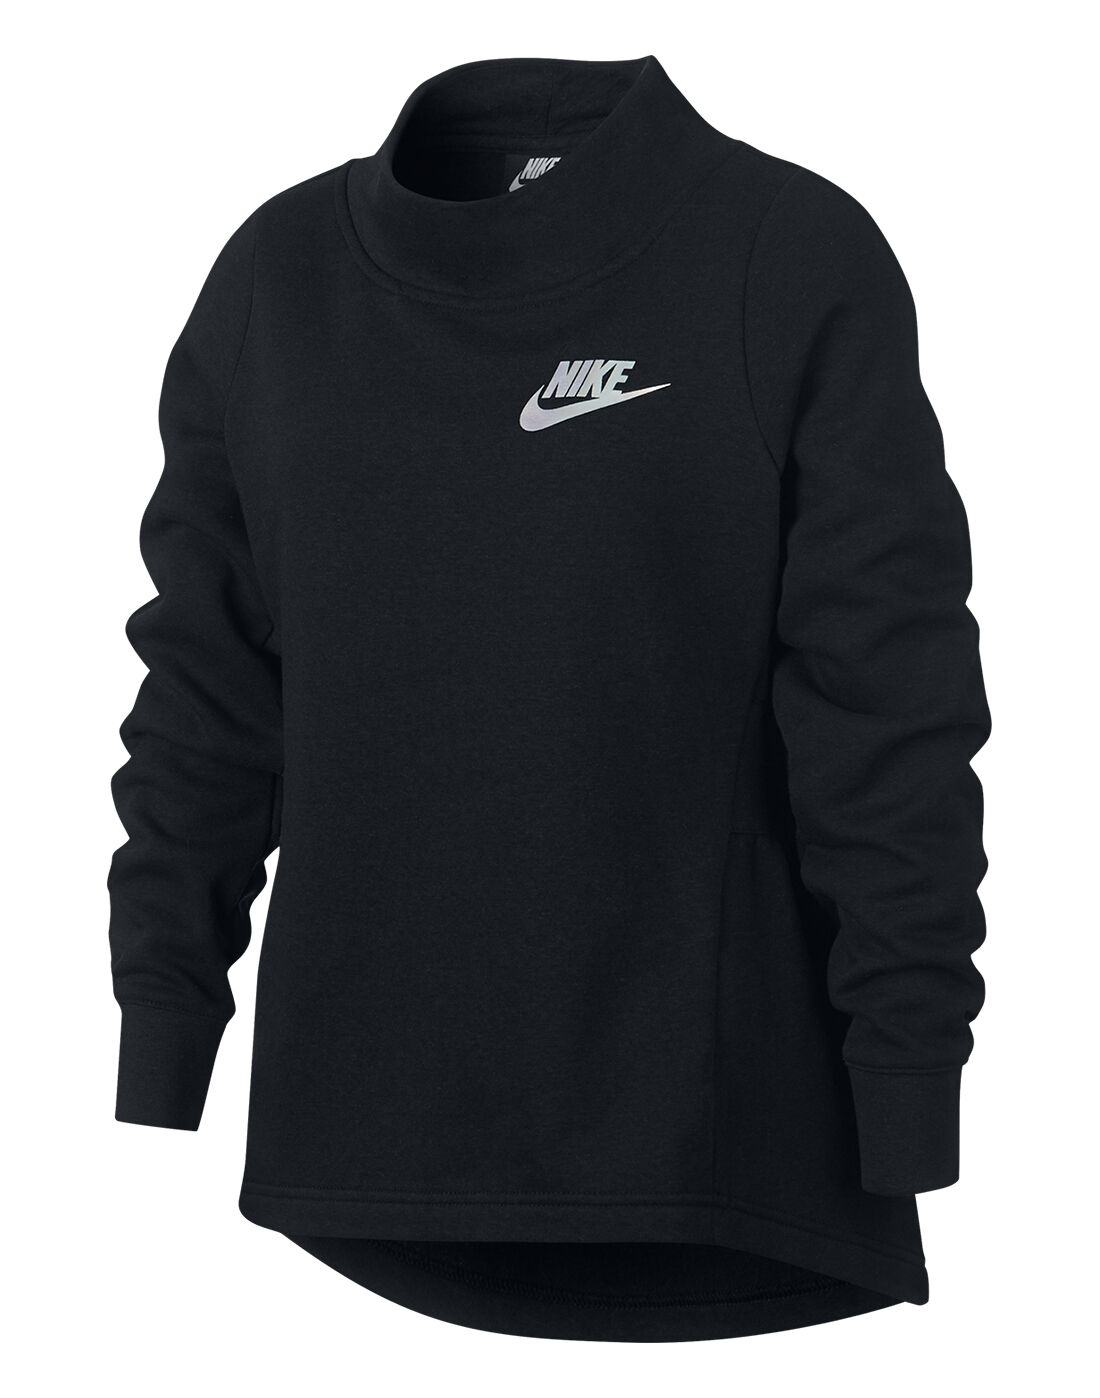 Girl's Black Nike Pleated Sweatshirt 